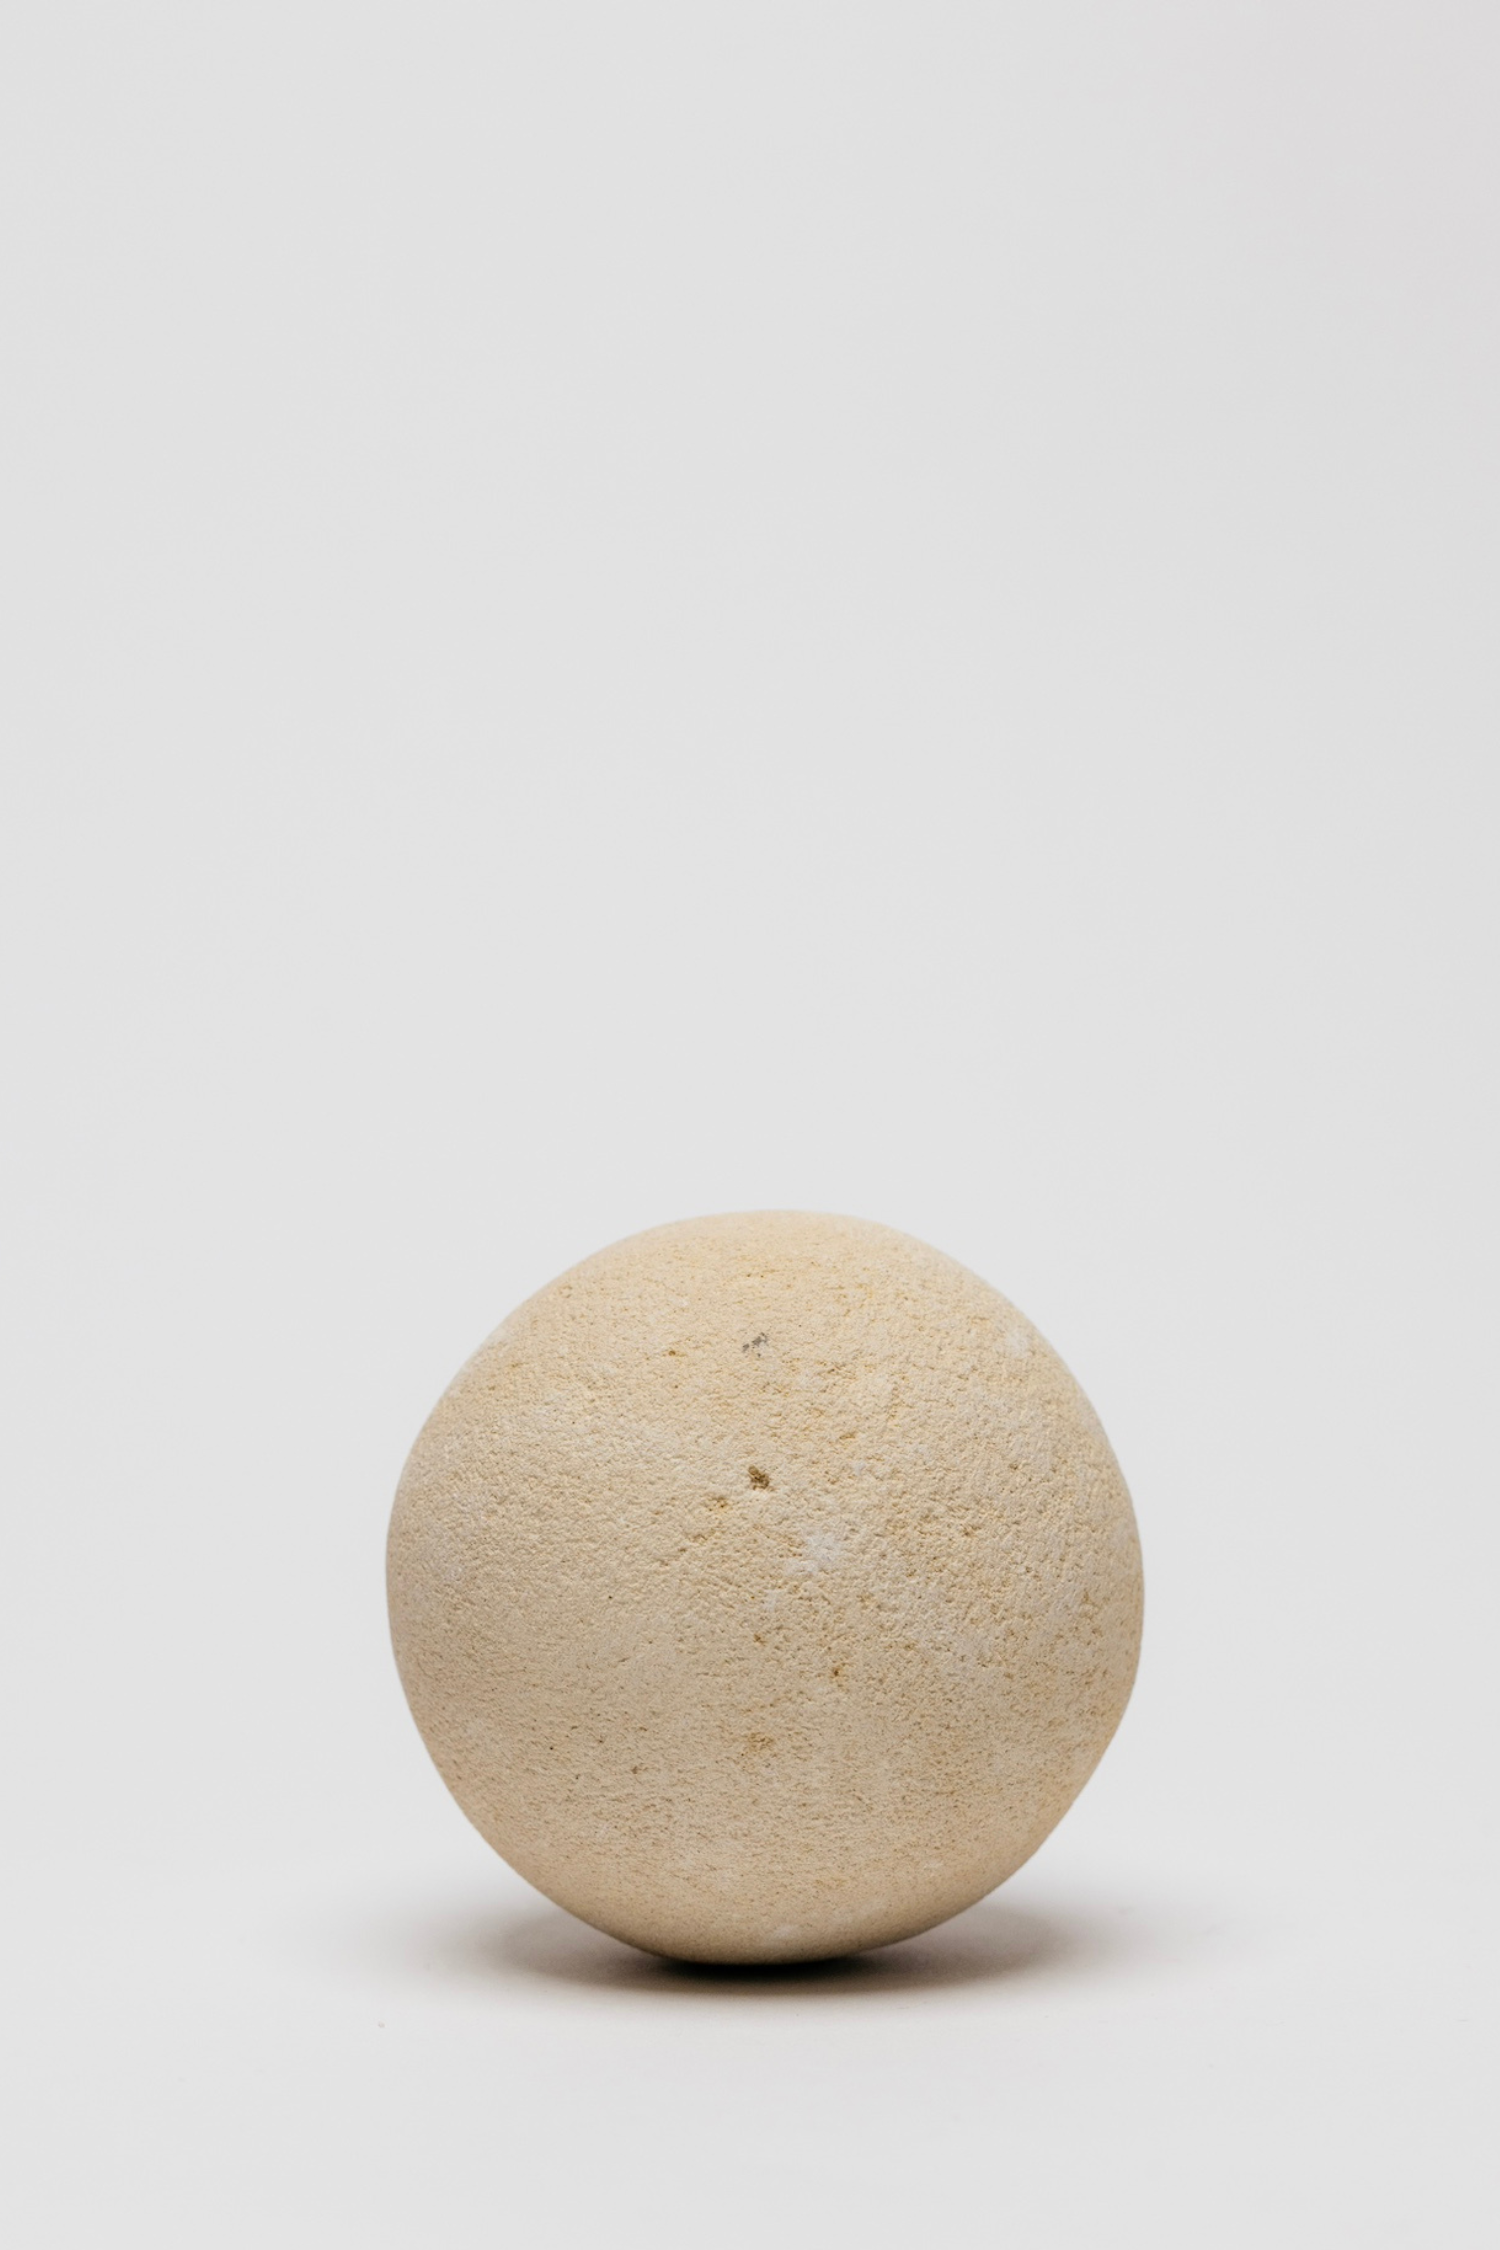 Valli Sandstone Sphere